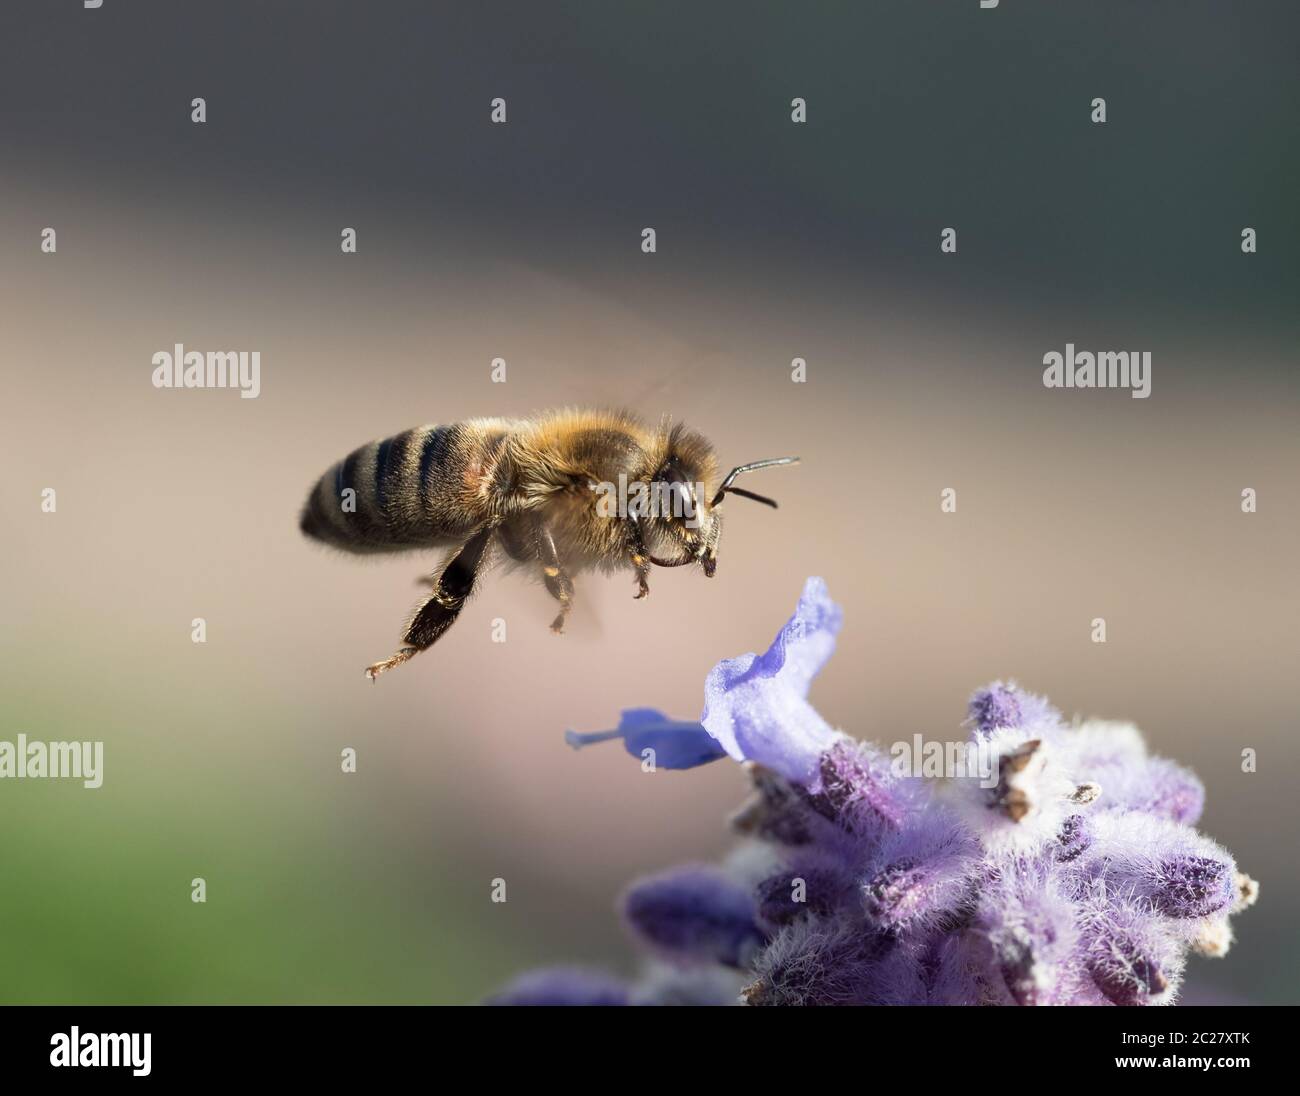 Macro shot of Honey Bee in flight by flower. Stock Photo